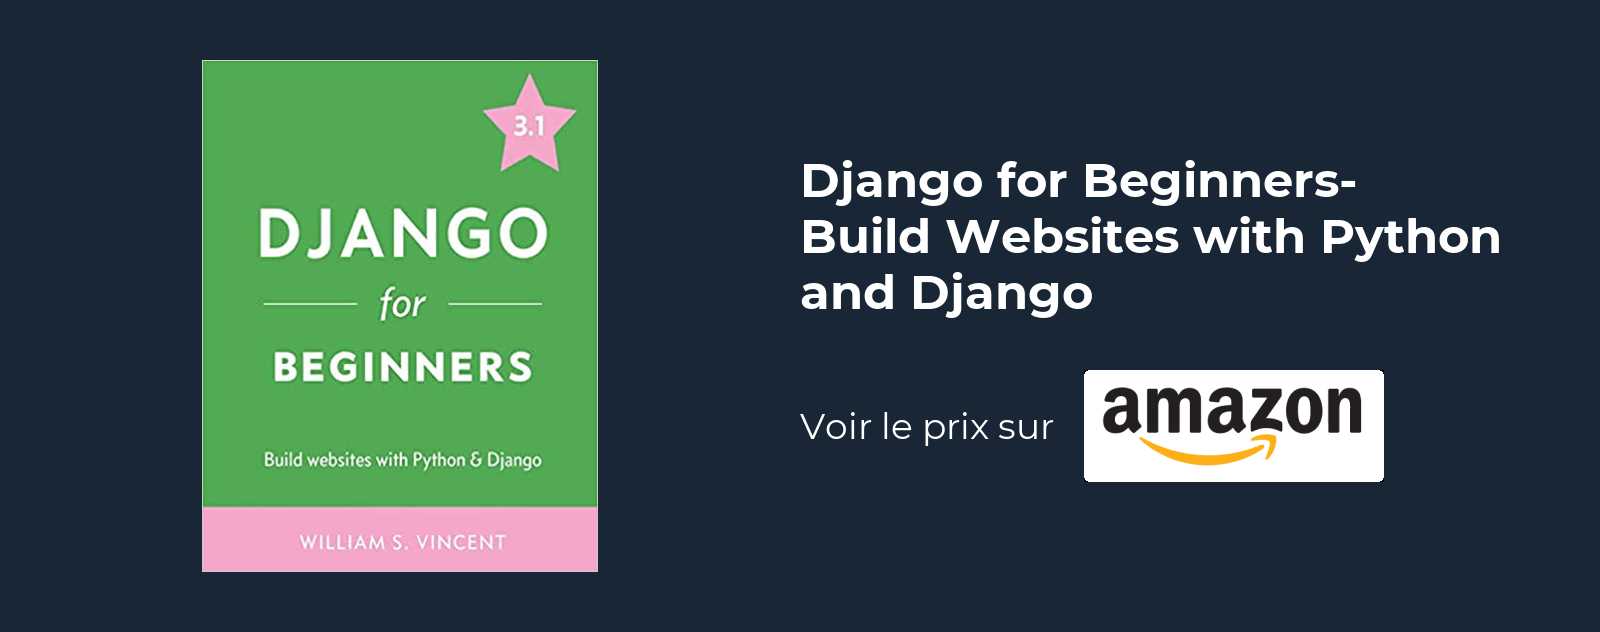 Django for Beginners- Build Websites with Python and Django